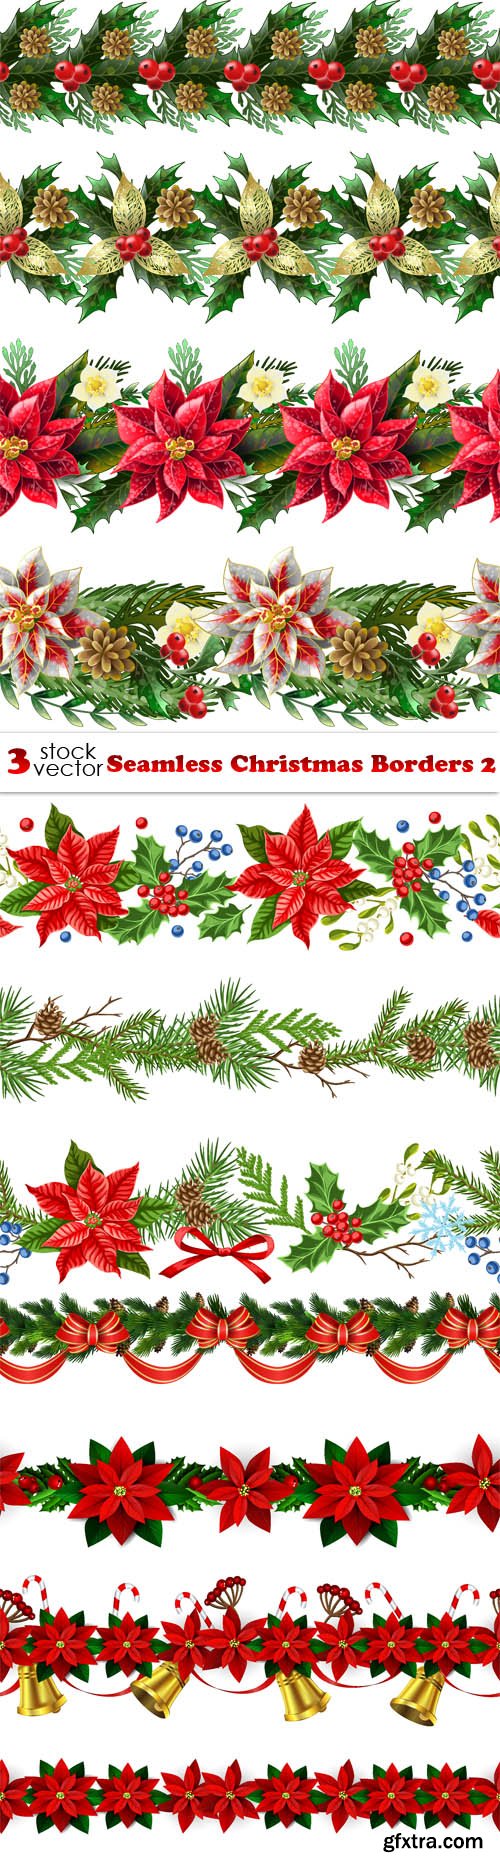 Vectors - Seamless Christmas Borders 2